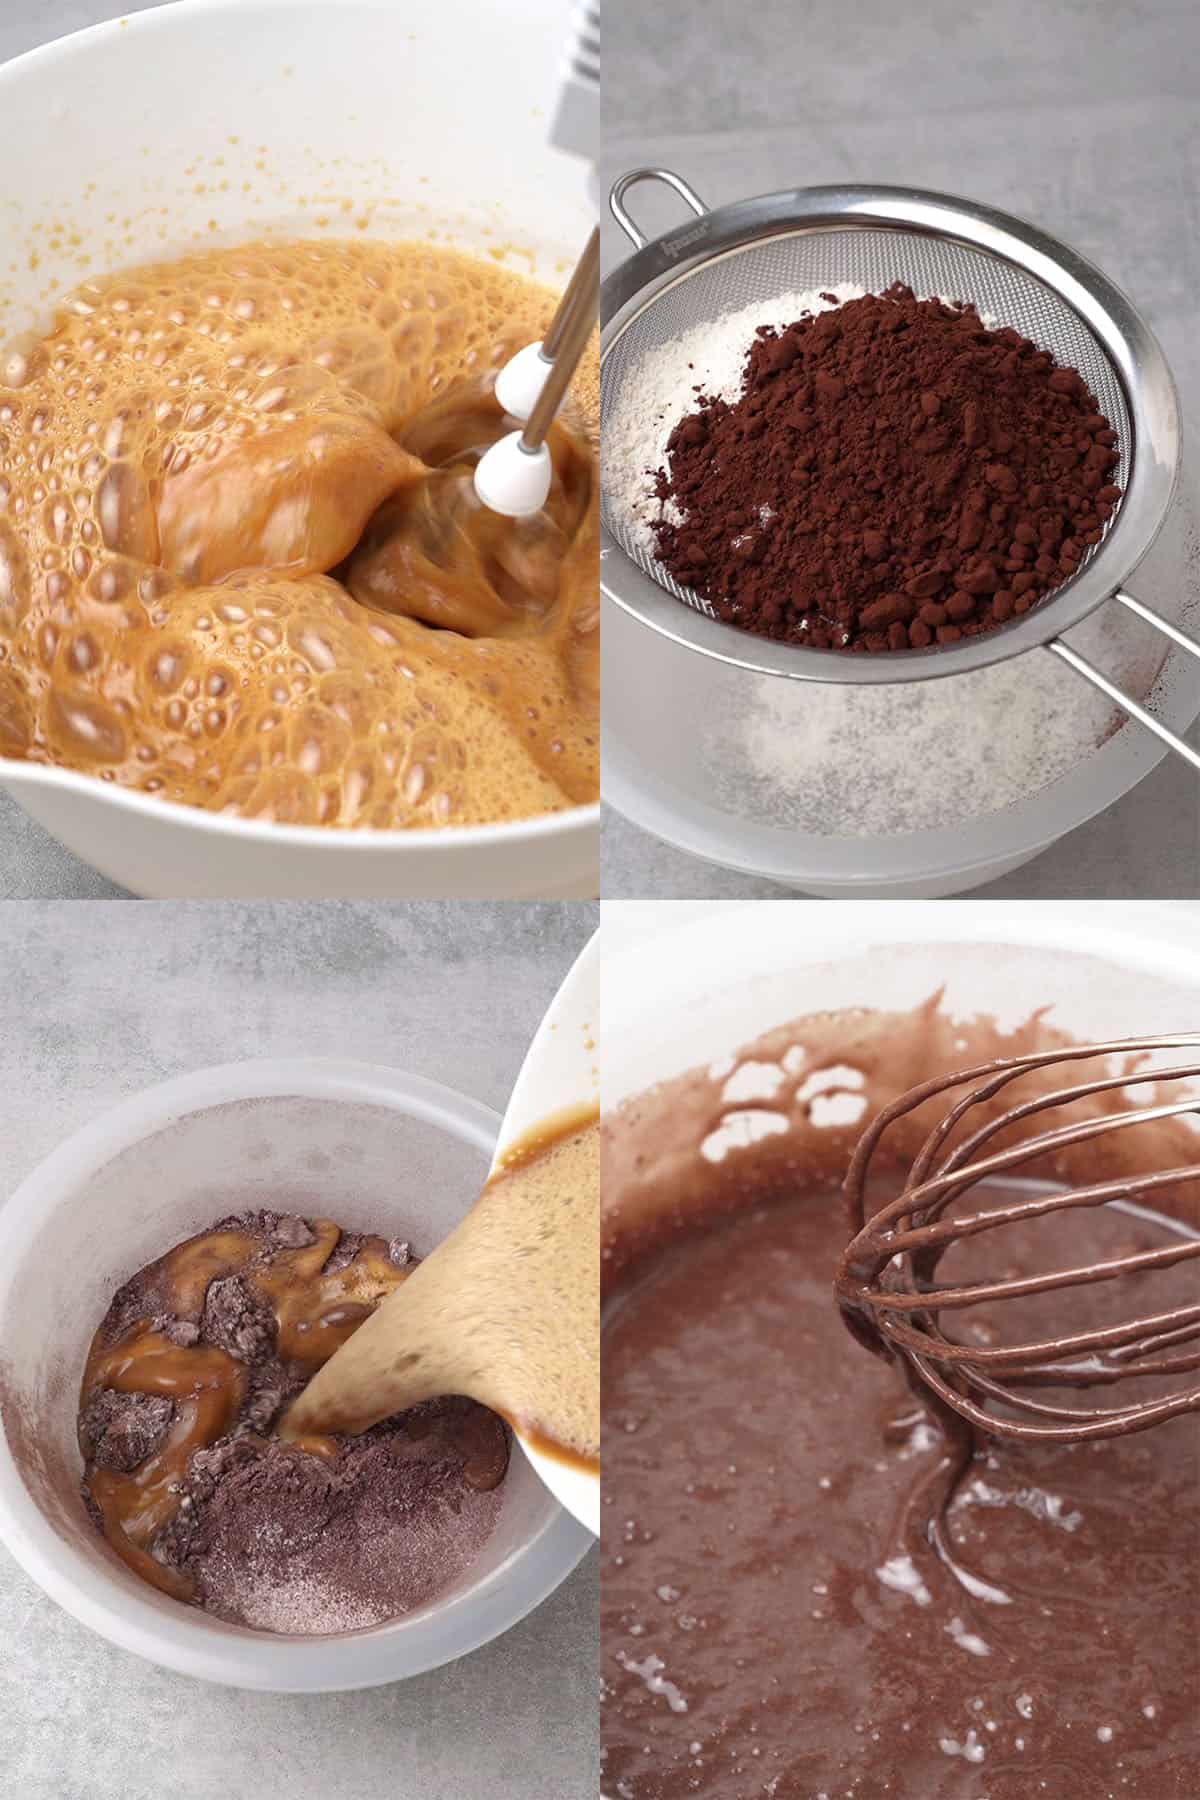 Chocolate sponge assembly process.